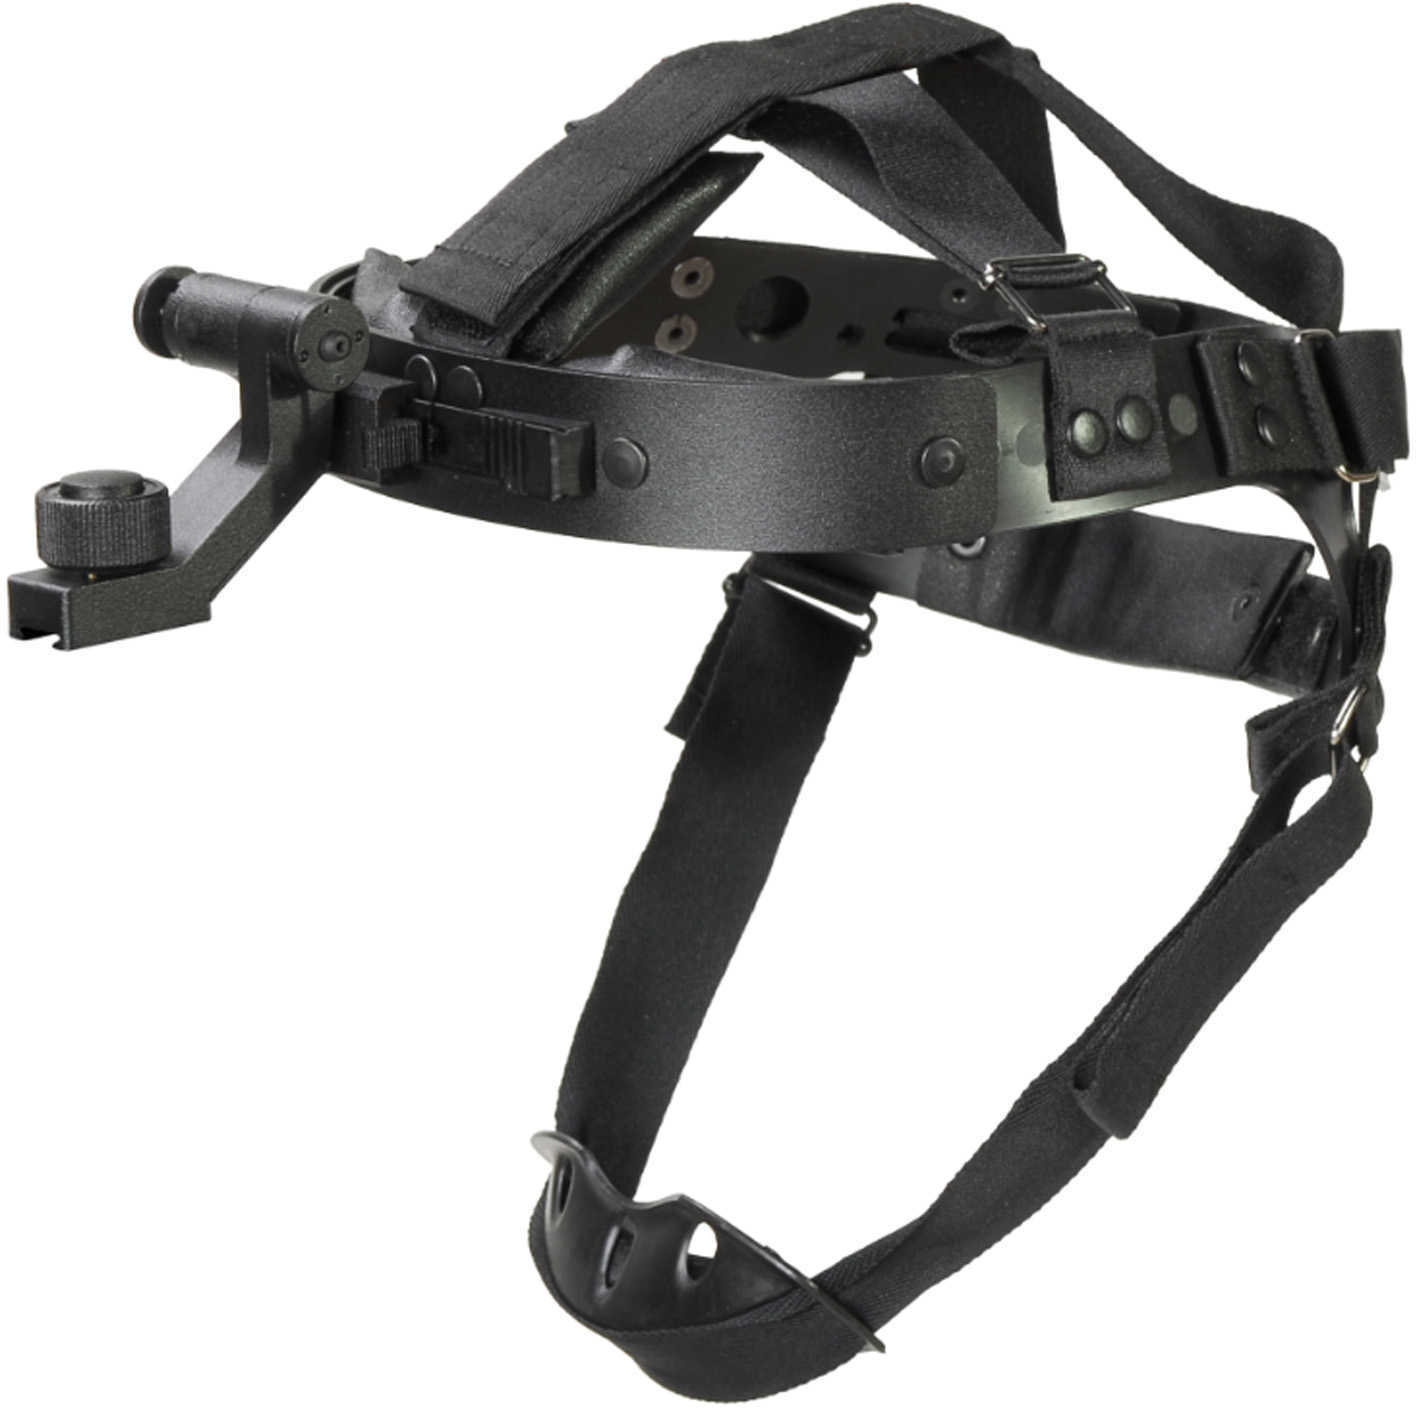 ATN Goggle Kit Night Vision Headset W/Chin Strap ACMPAN14Gk